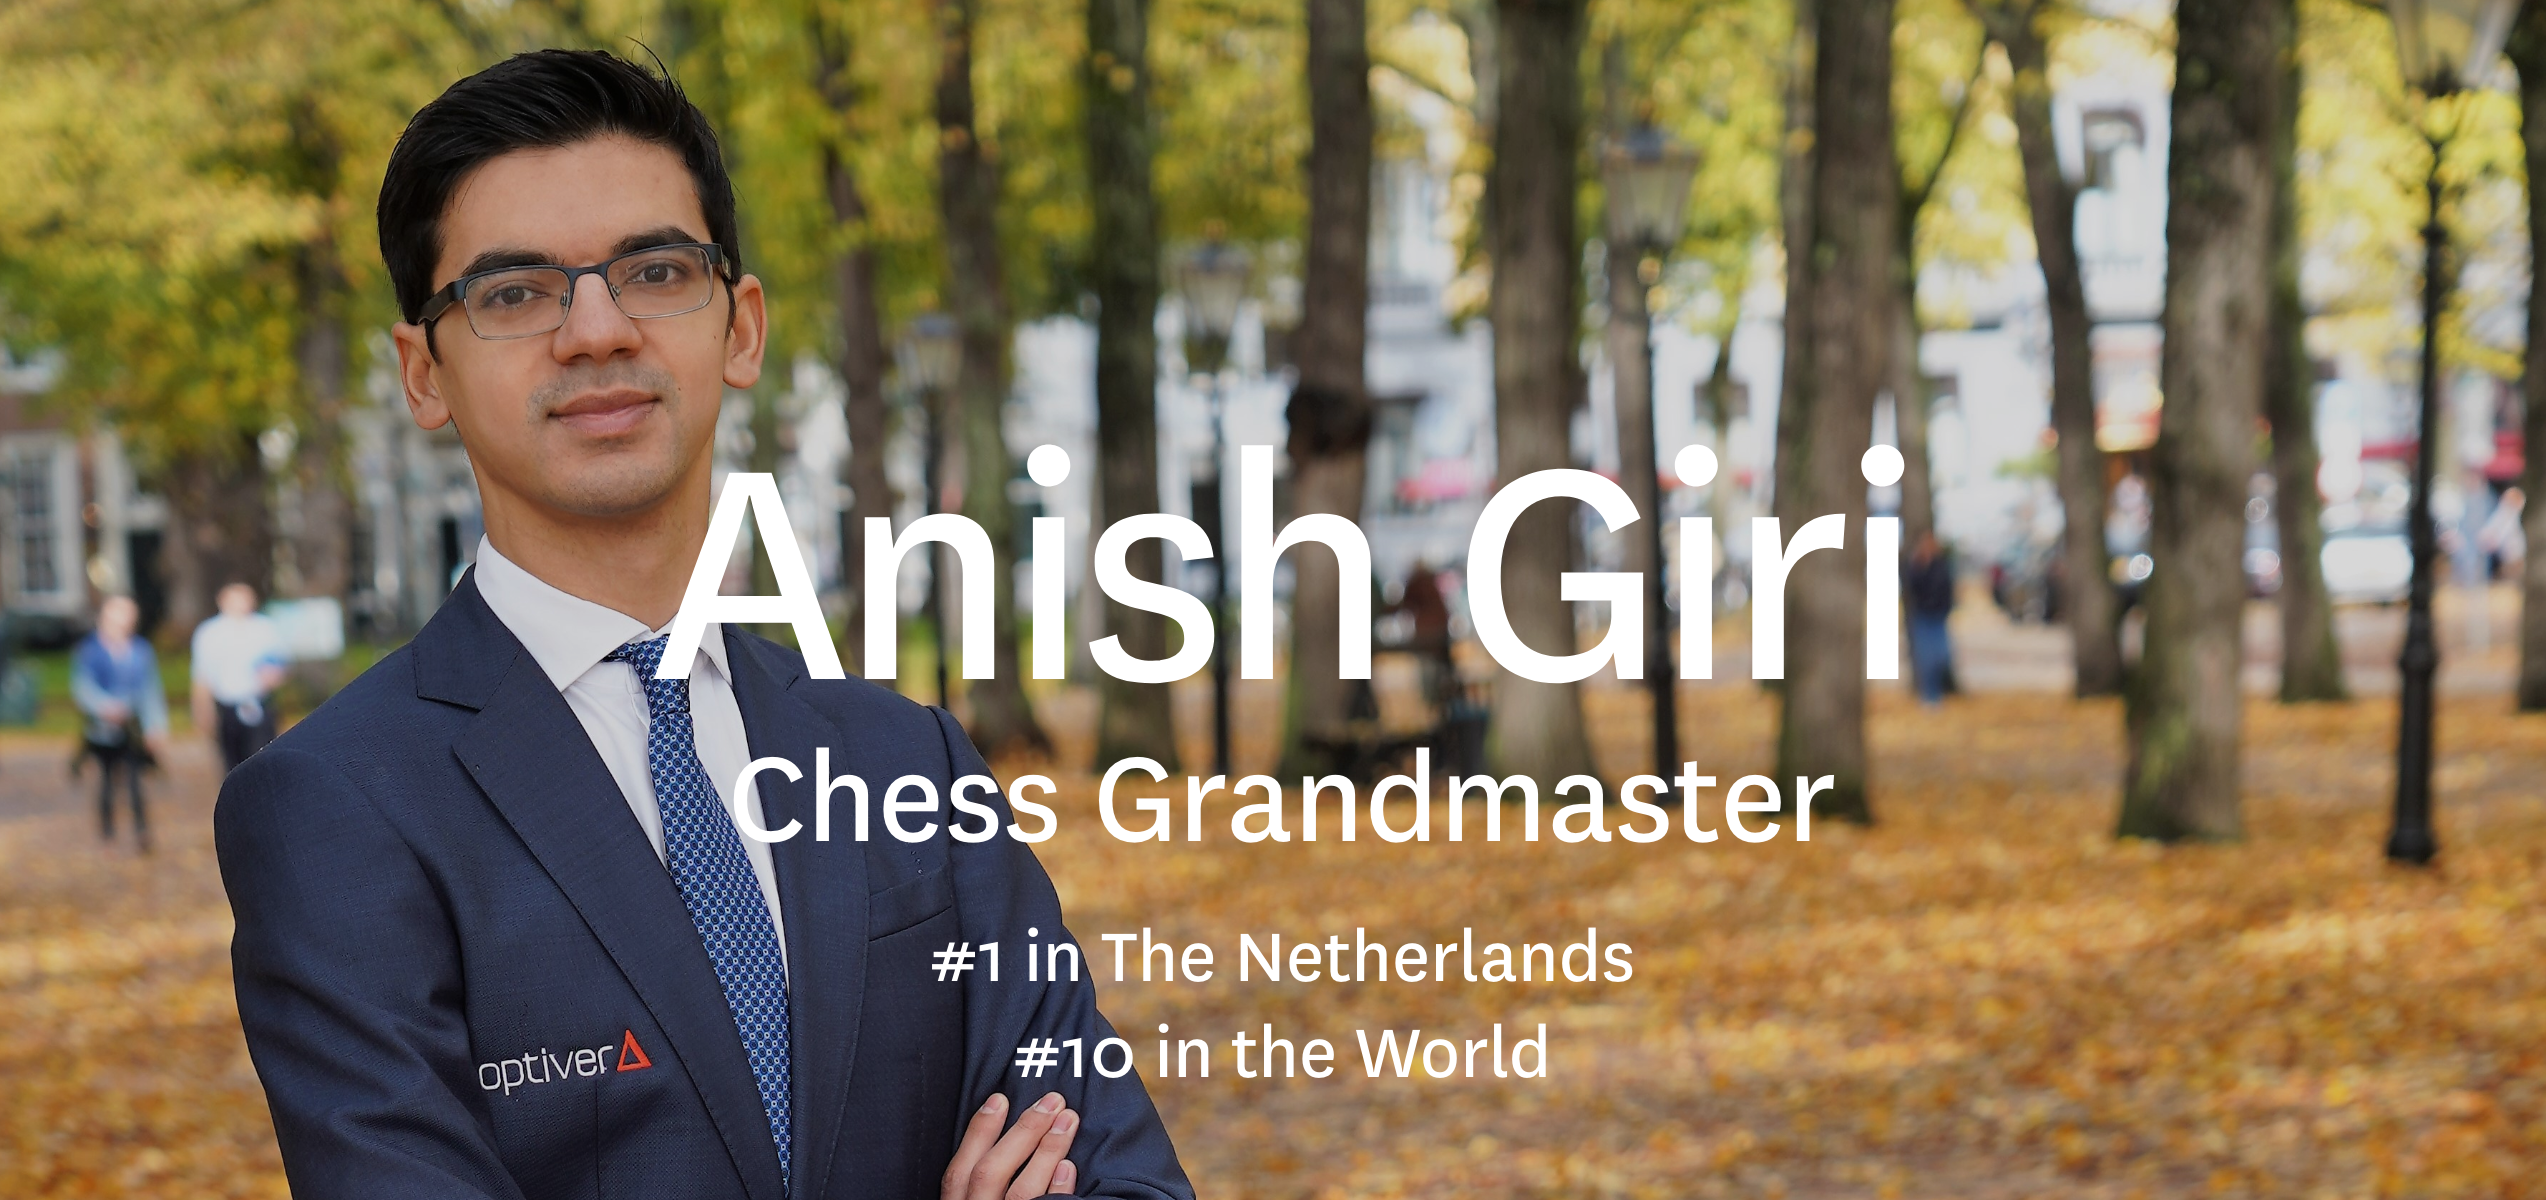 Anish Giri is Dutch champion - News - SimpleChess